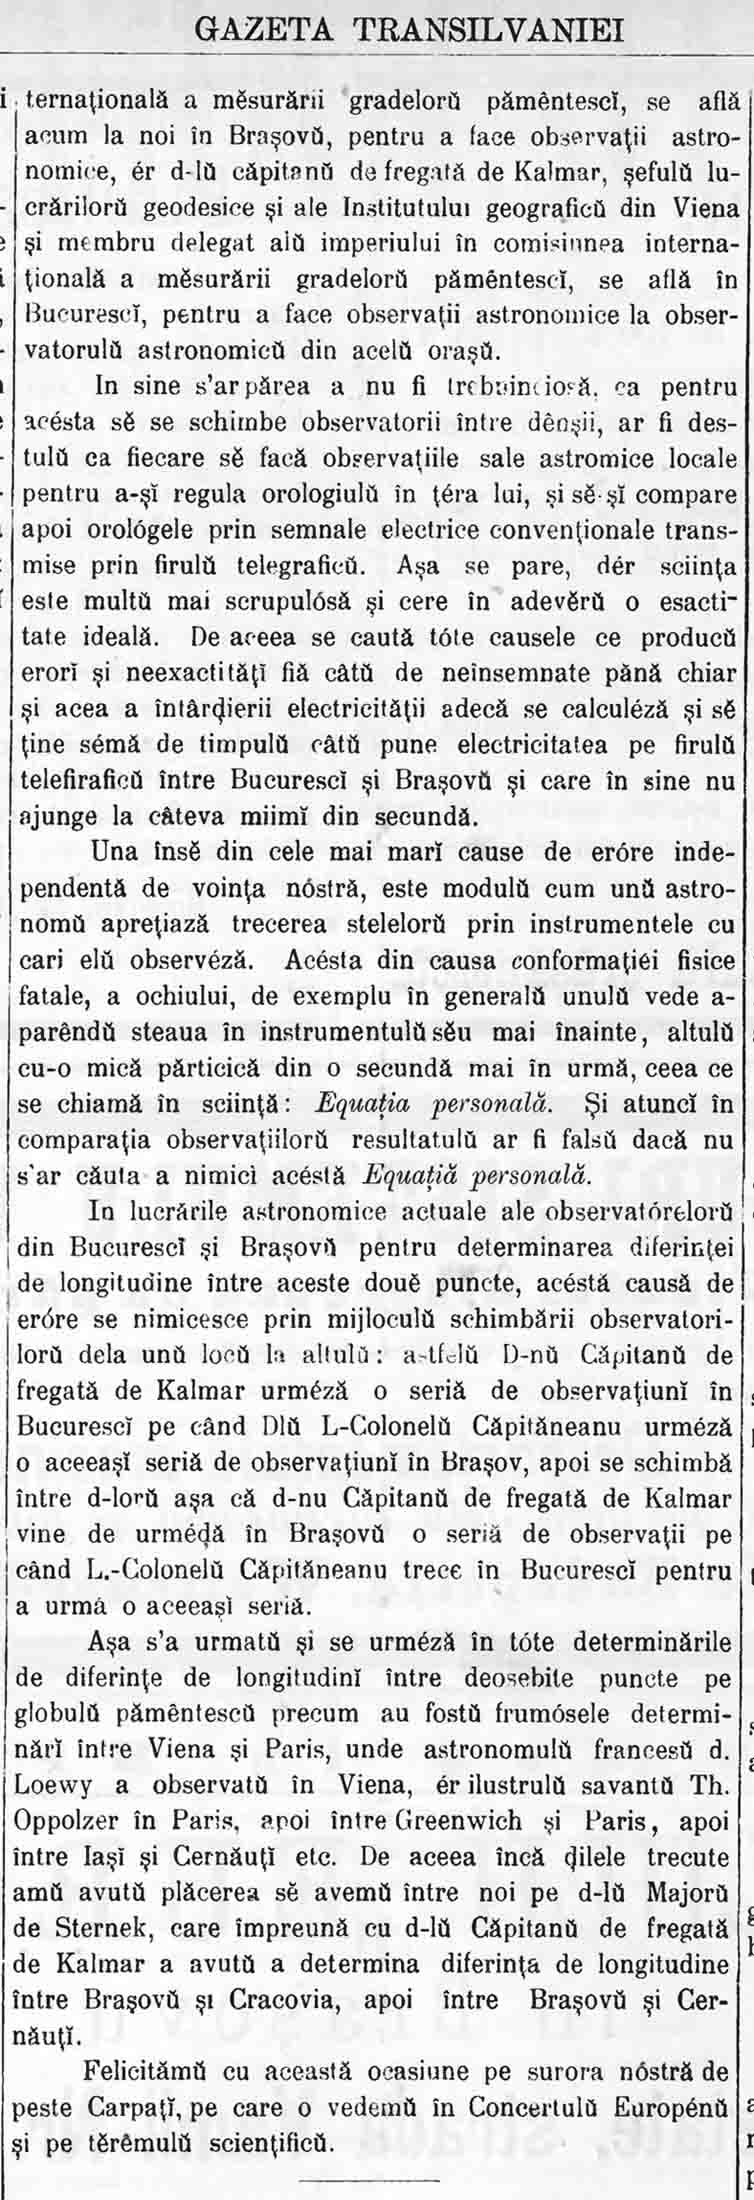 Gazeta Transilvaniei / nr. 189 | 25 august 1885 [continuare]